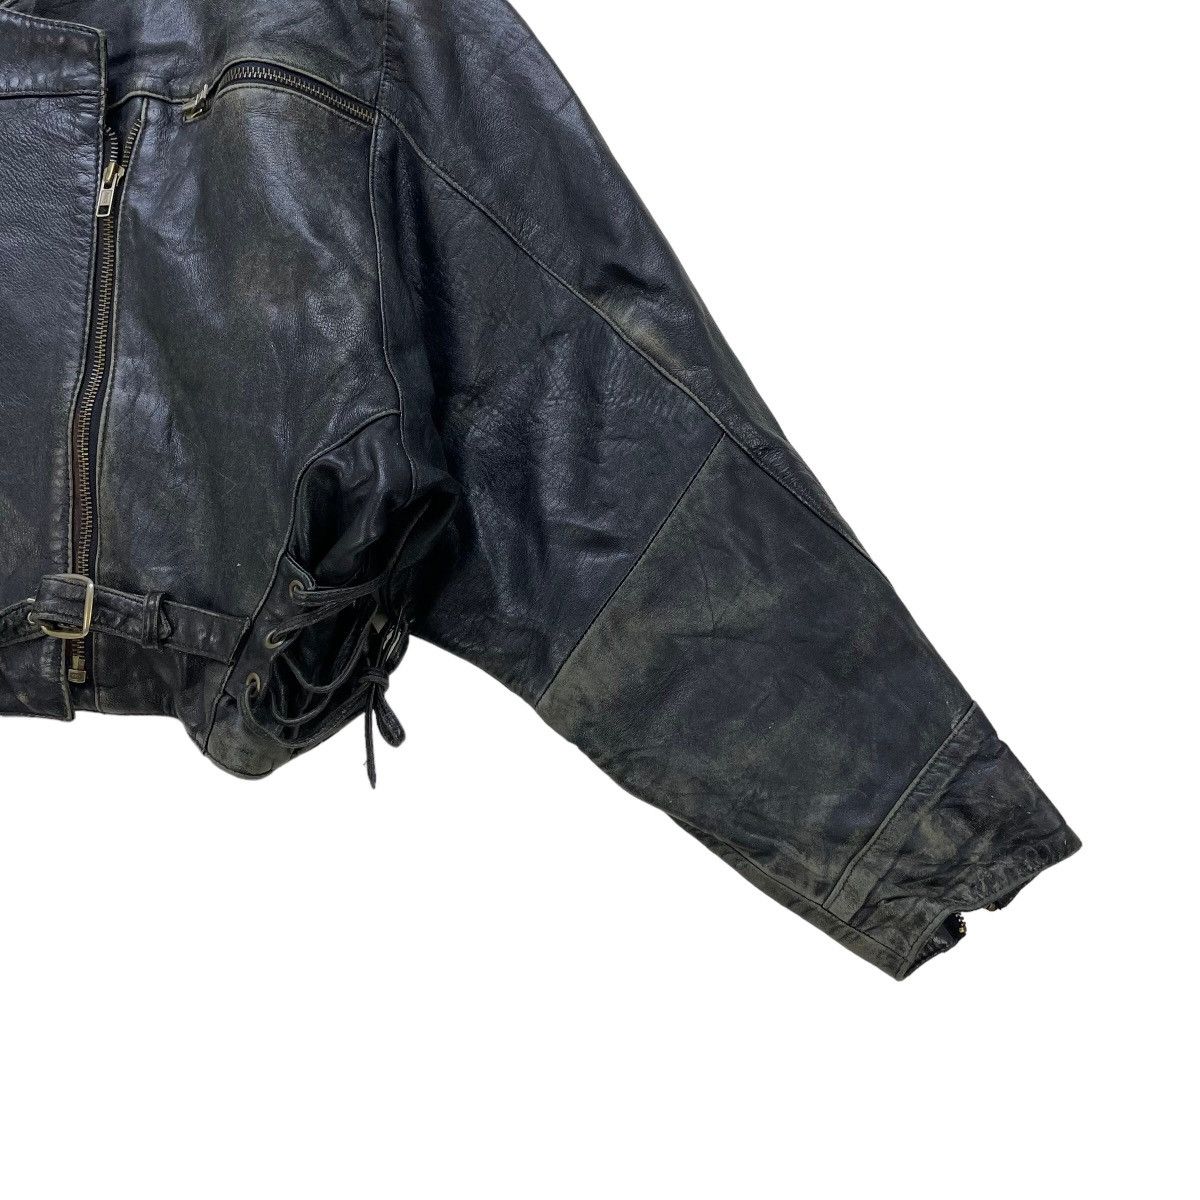 Vintage Genuine Leather Jacket Made In Turkey - 10